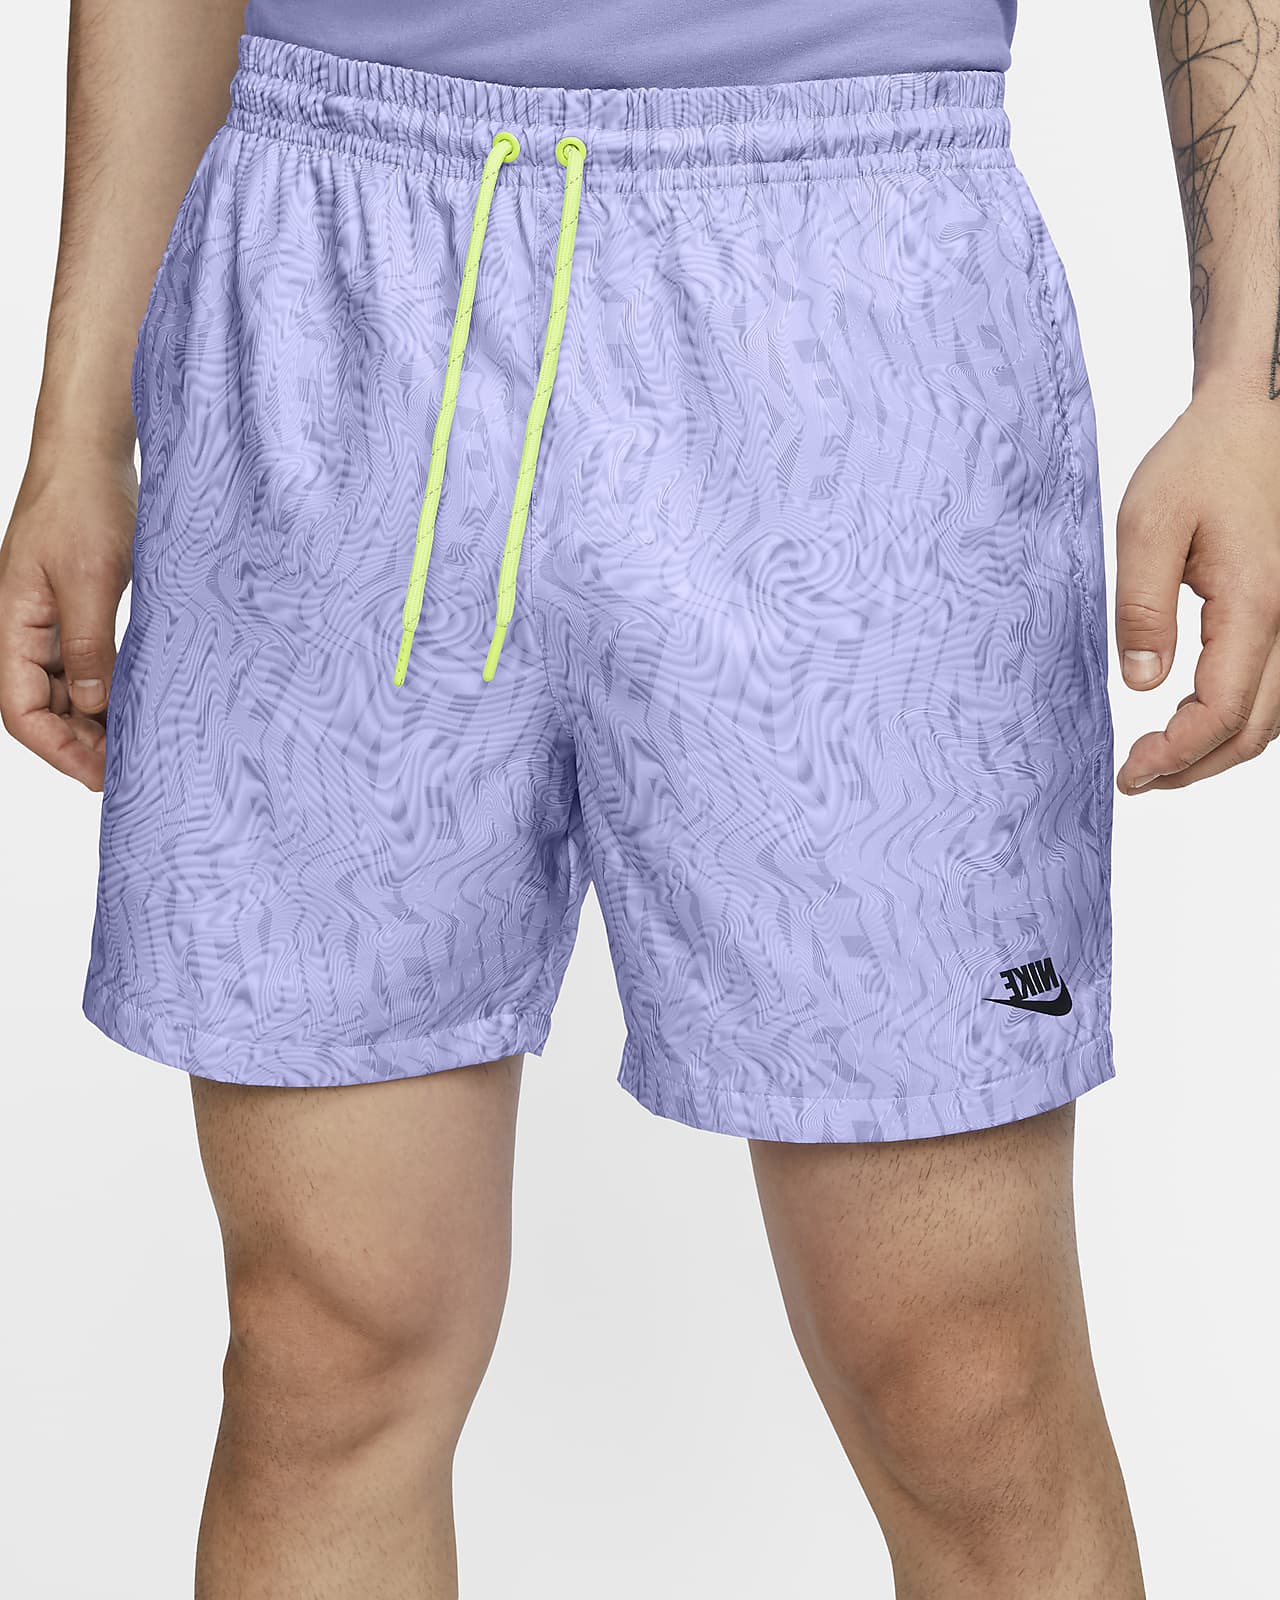 purple shorts nike